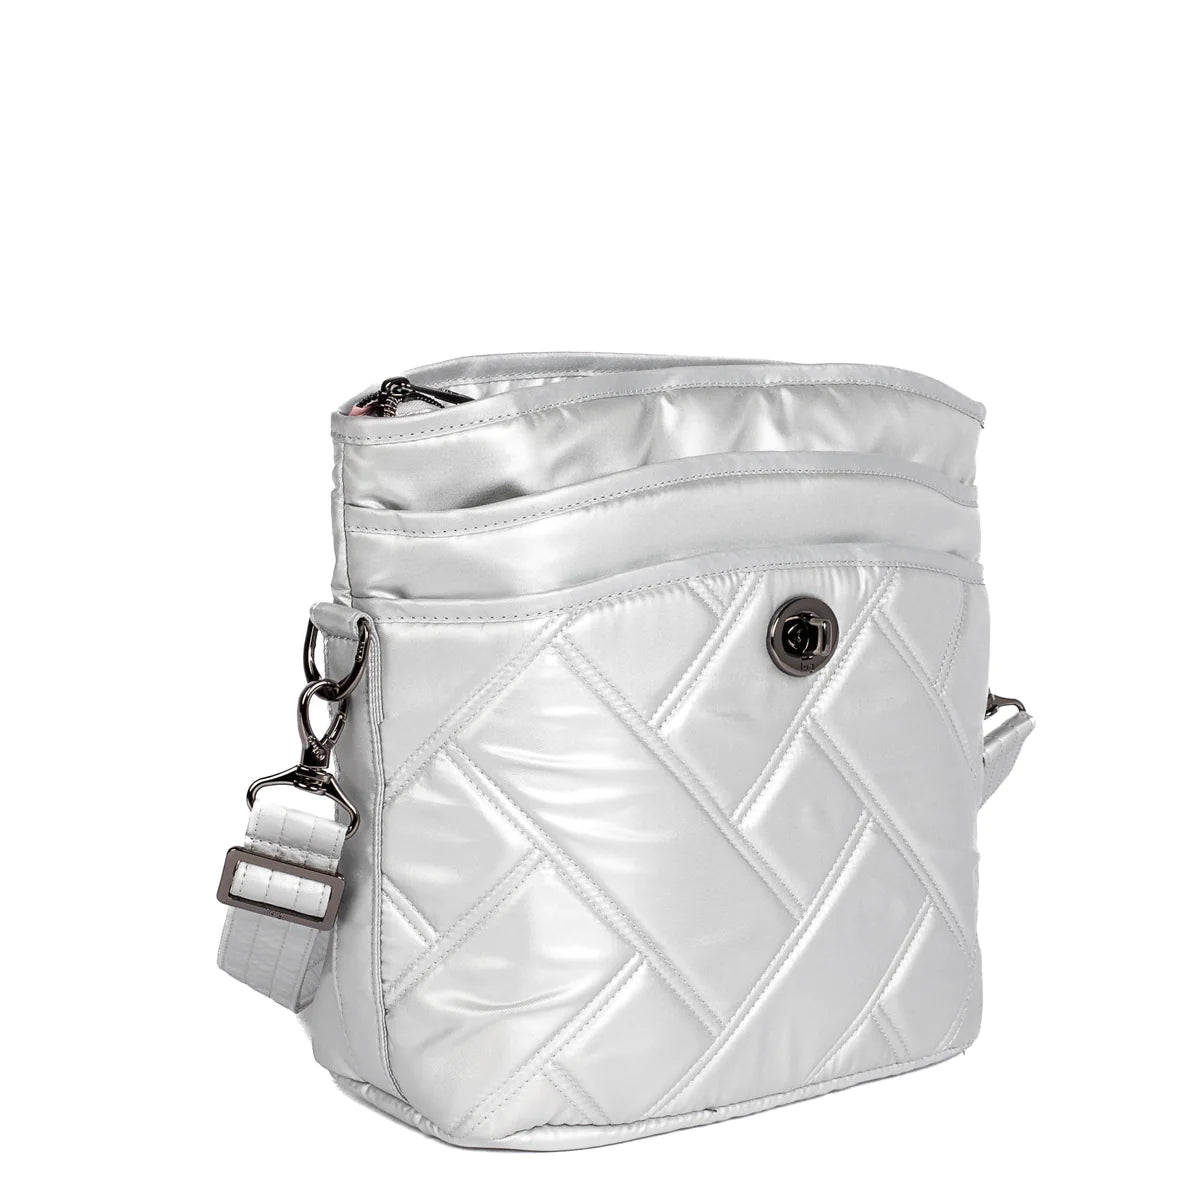 LUG Adagio Shoulder Bag in Metallic Silver